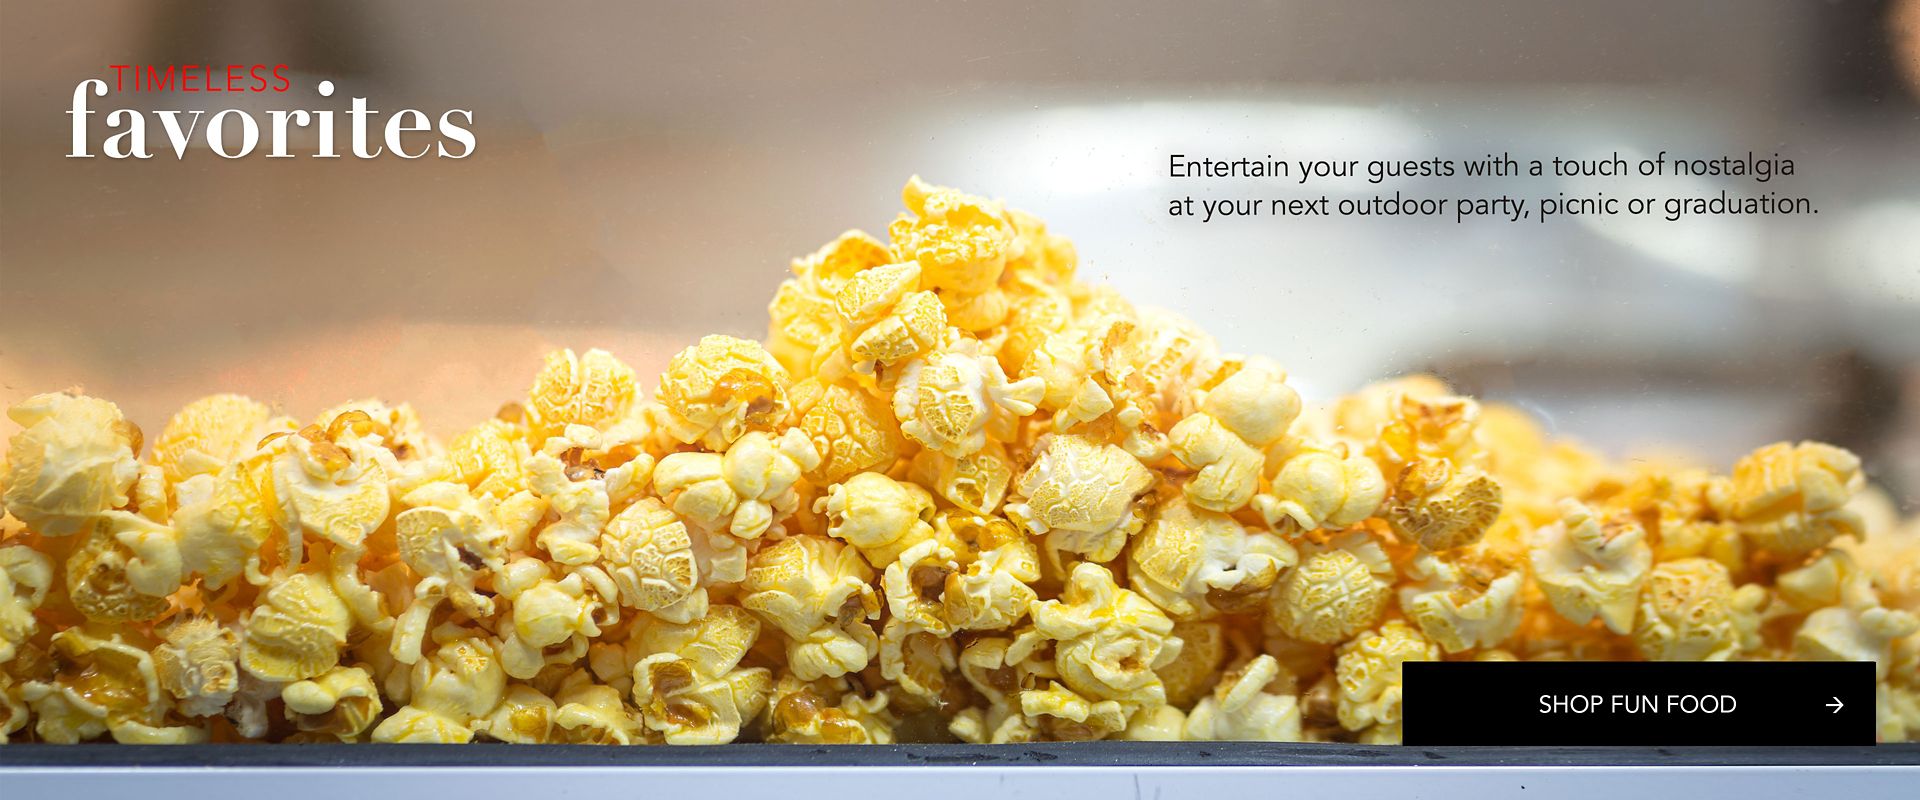 Popcorn machine for rent NJ